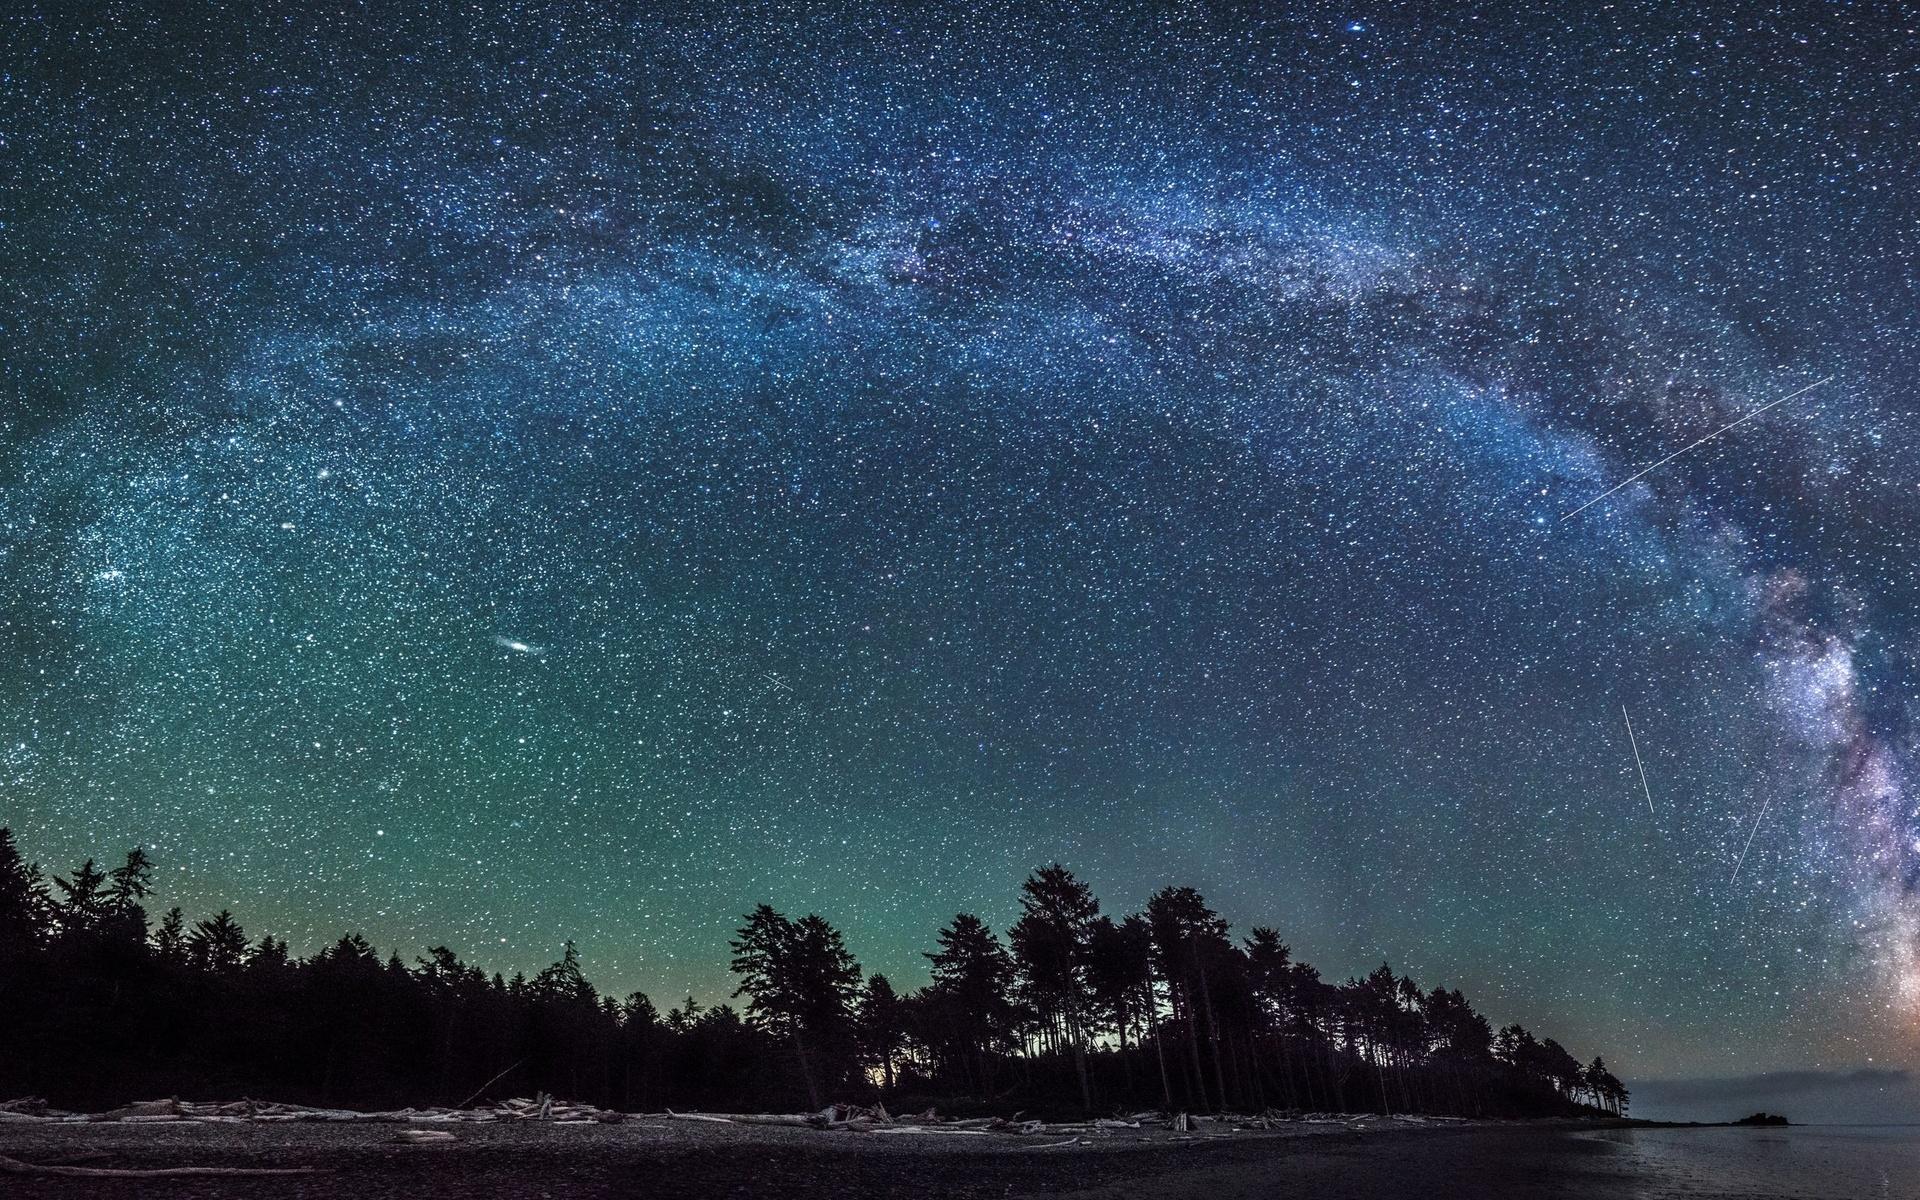 Download Starry Galactic Sky wallpaper